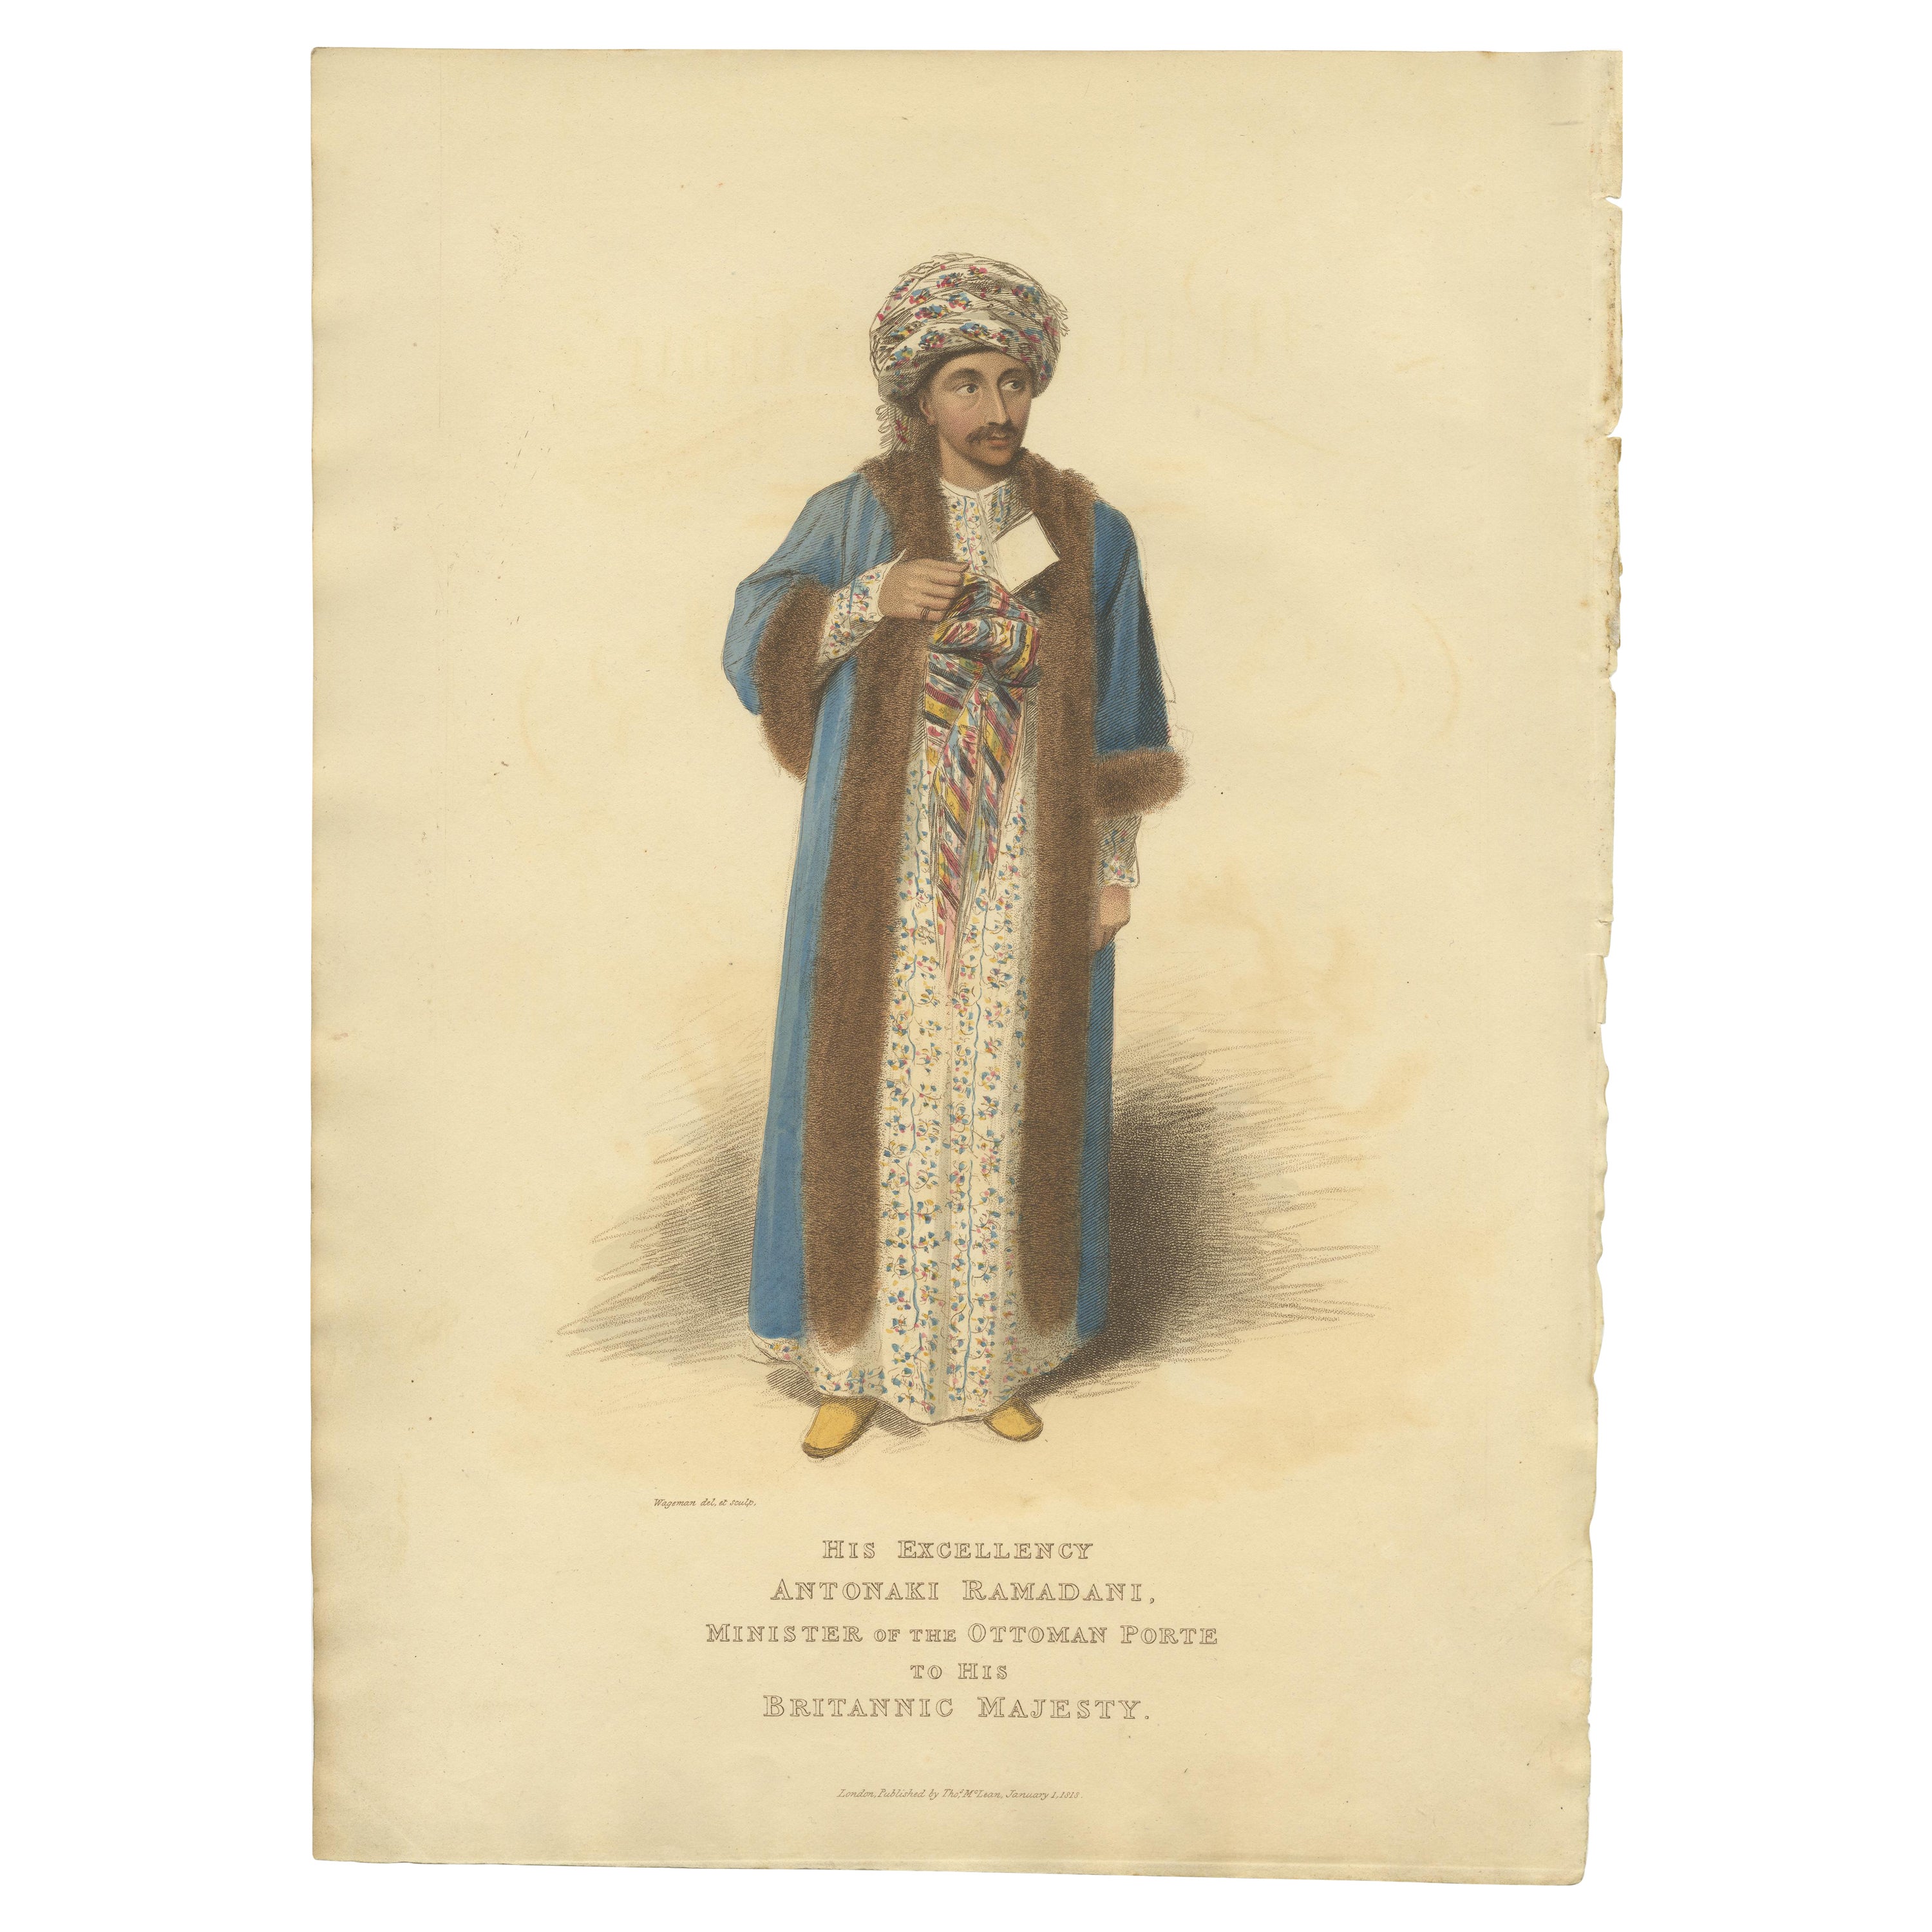 Antique Print of Antonaki Ramadani, Minister from the Ottoman Porte, 1818